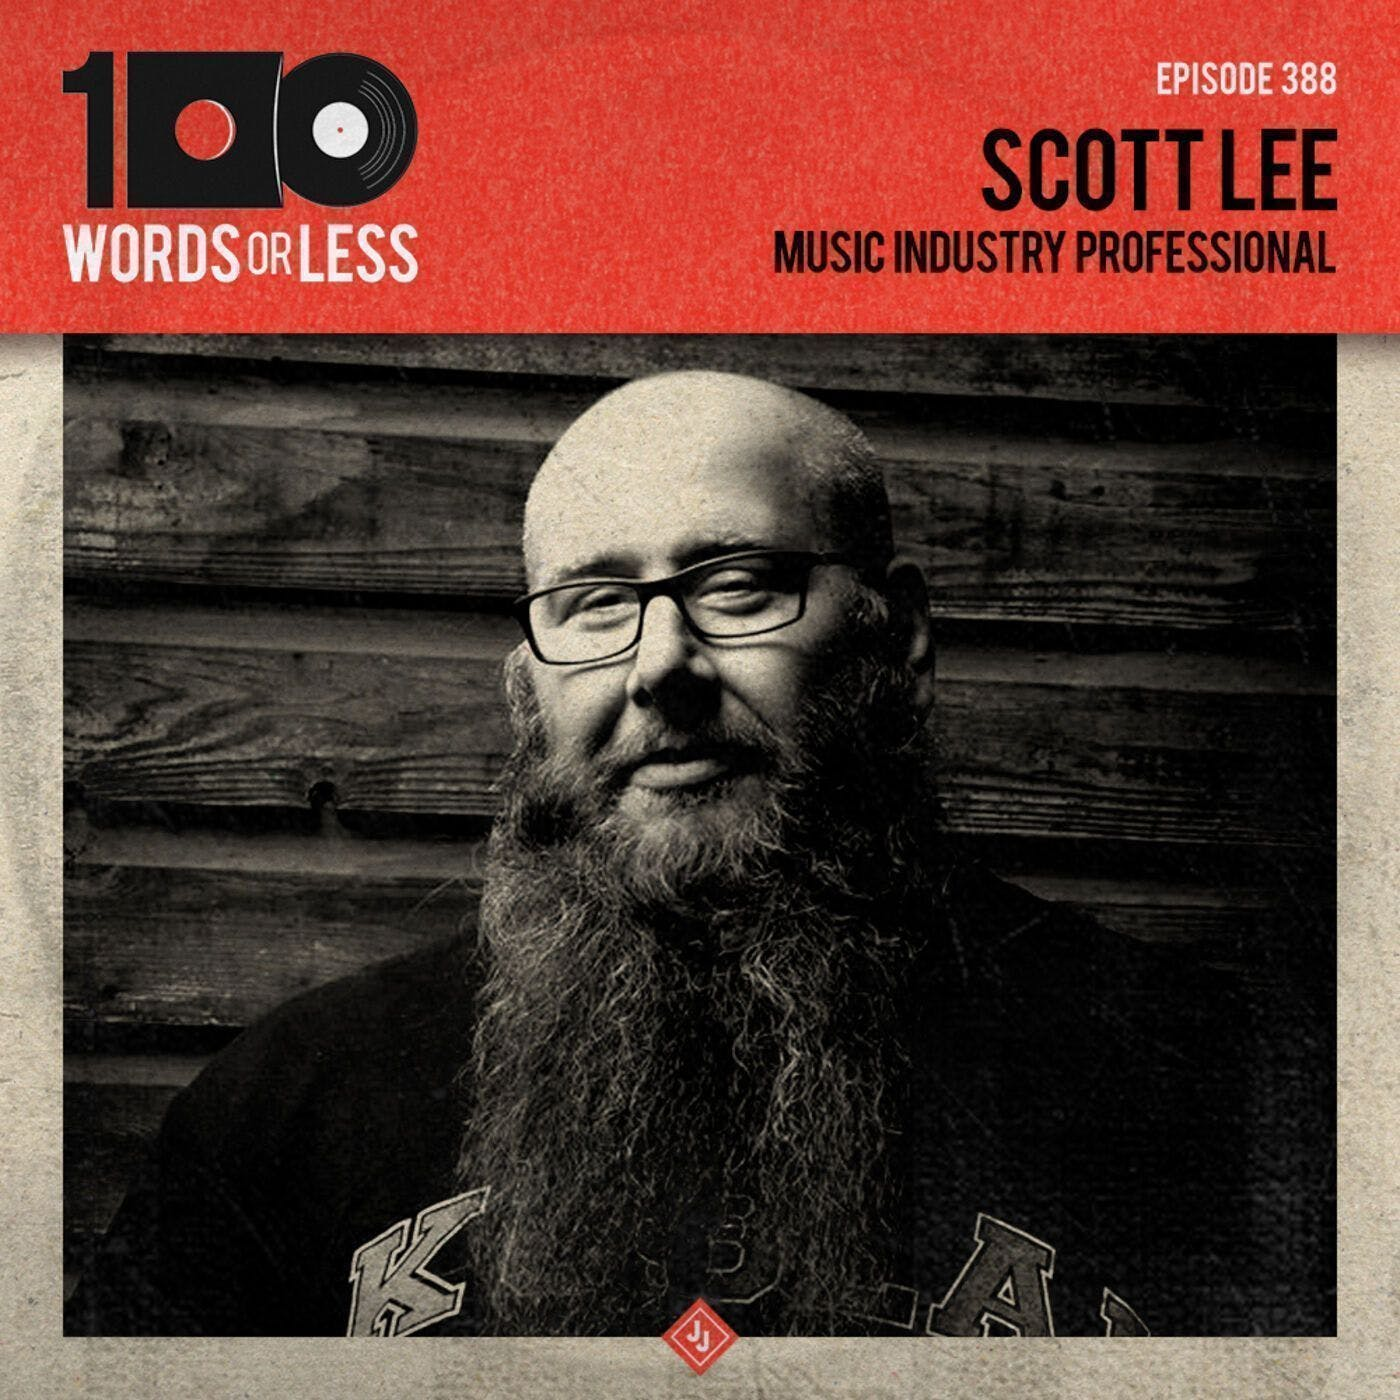 Scott Lee, music industry professional